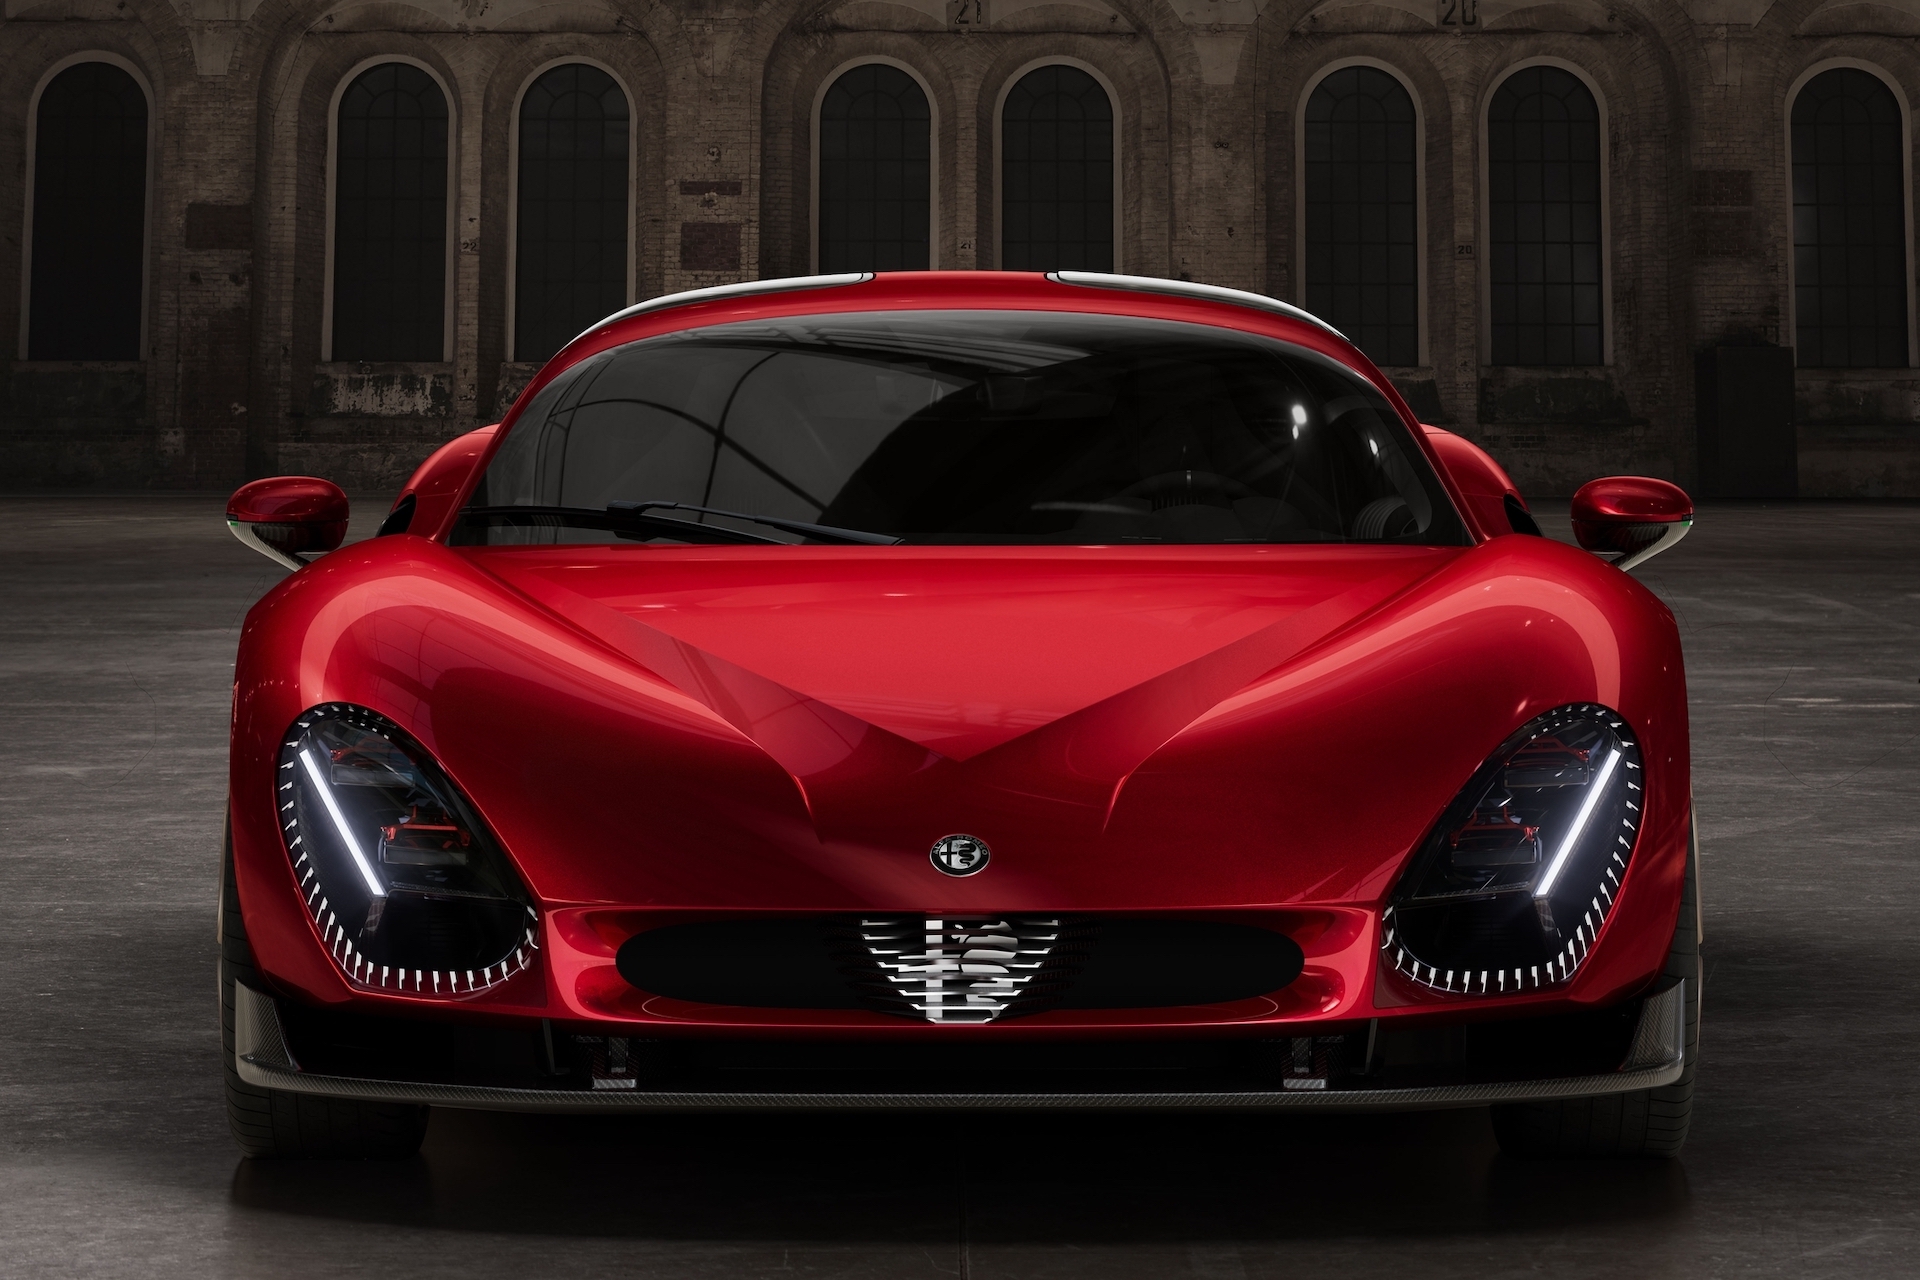 Alfa Romeo is preparing a new electric supercar in retro style